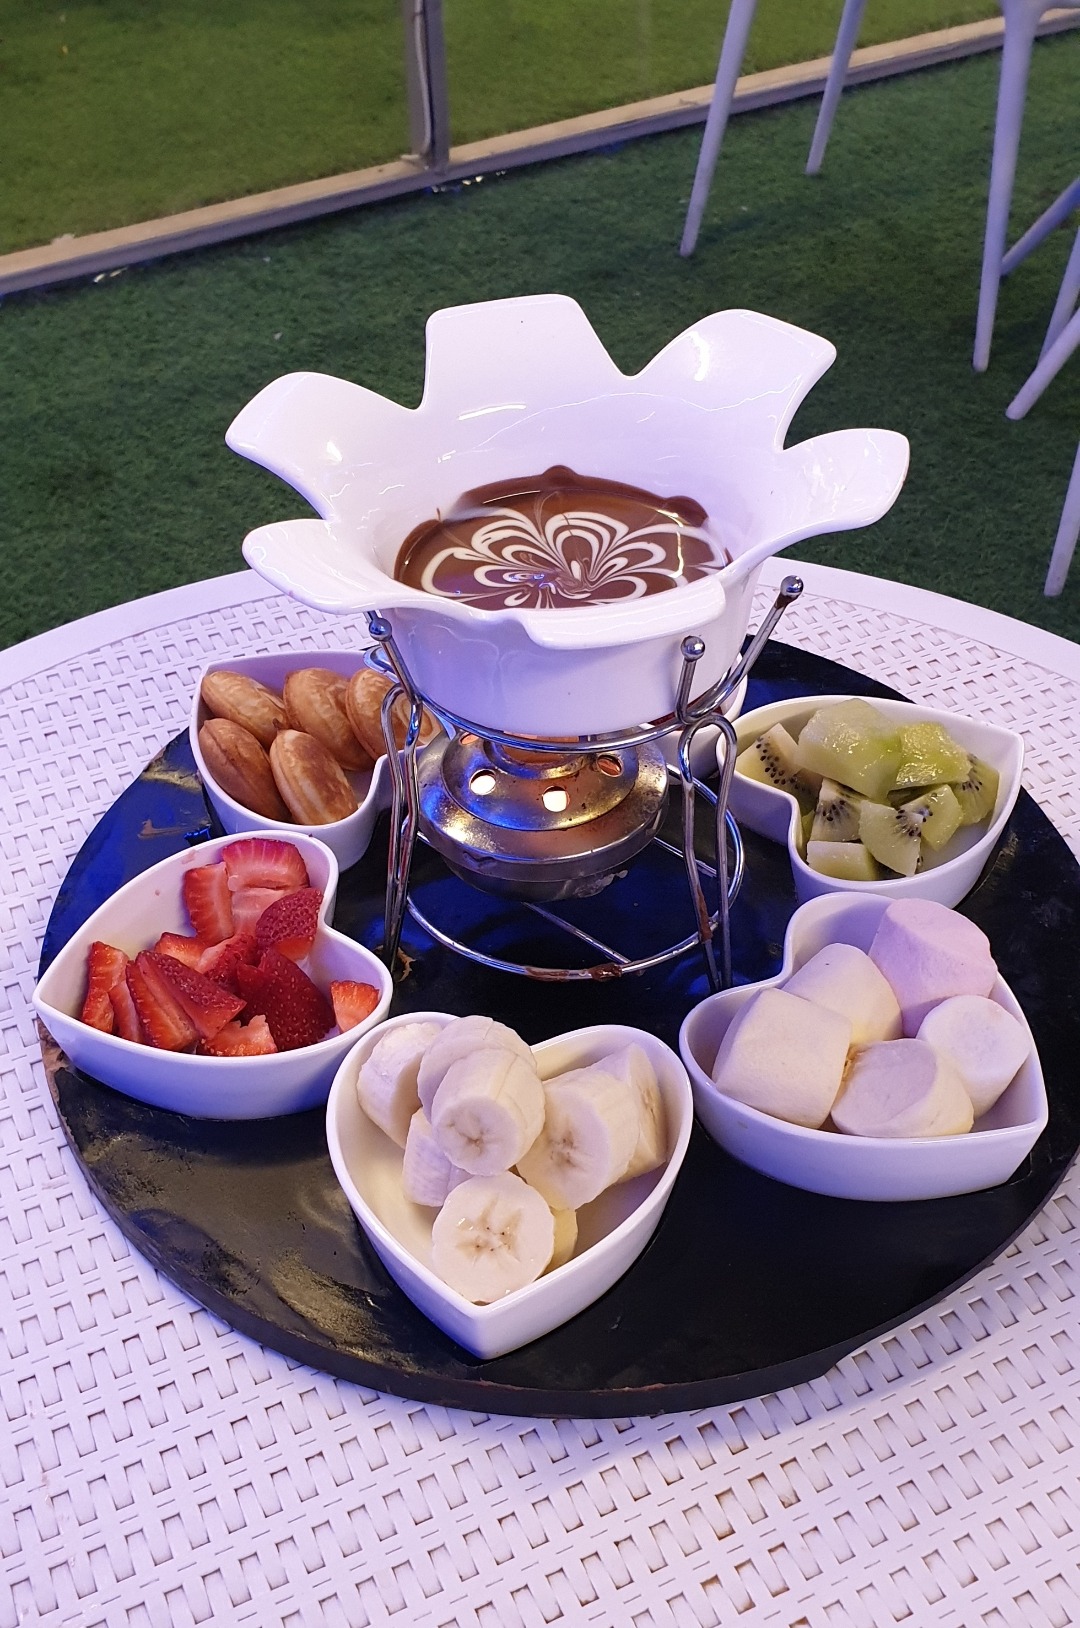 chocolate and marshmallows had a bad taste @ Noon Sweets - Bahrain